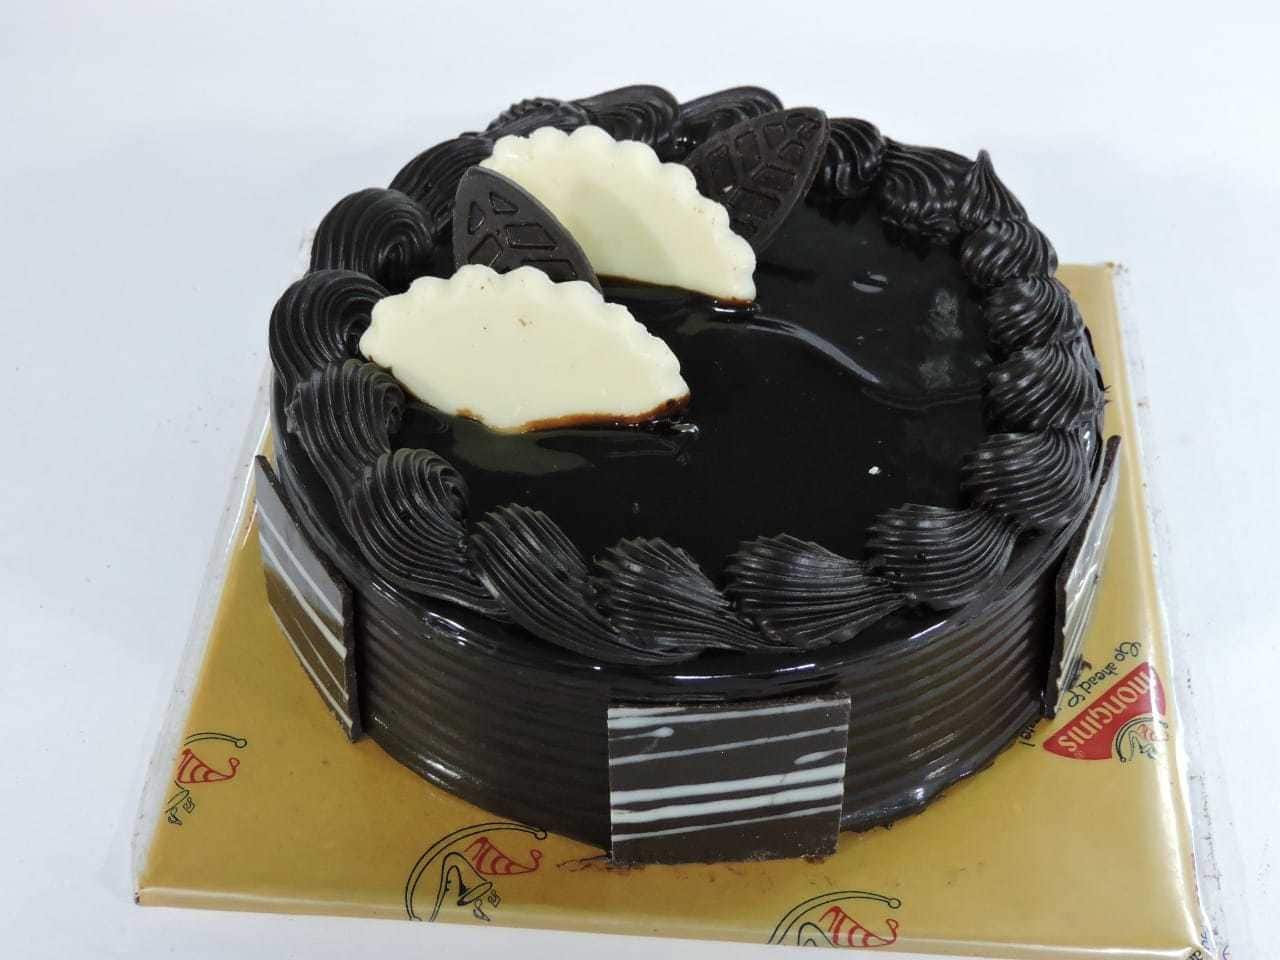 Monginis Cake Shop, Chhattisgarh on Twitter | Cake shop design, Cake shop,  Cake